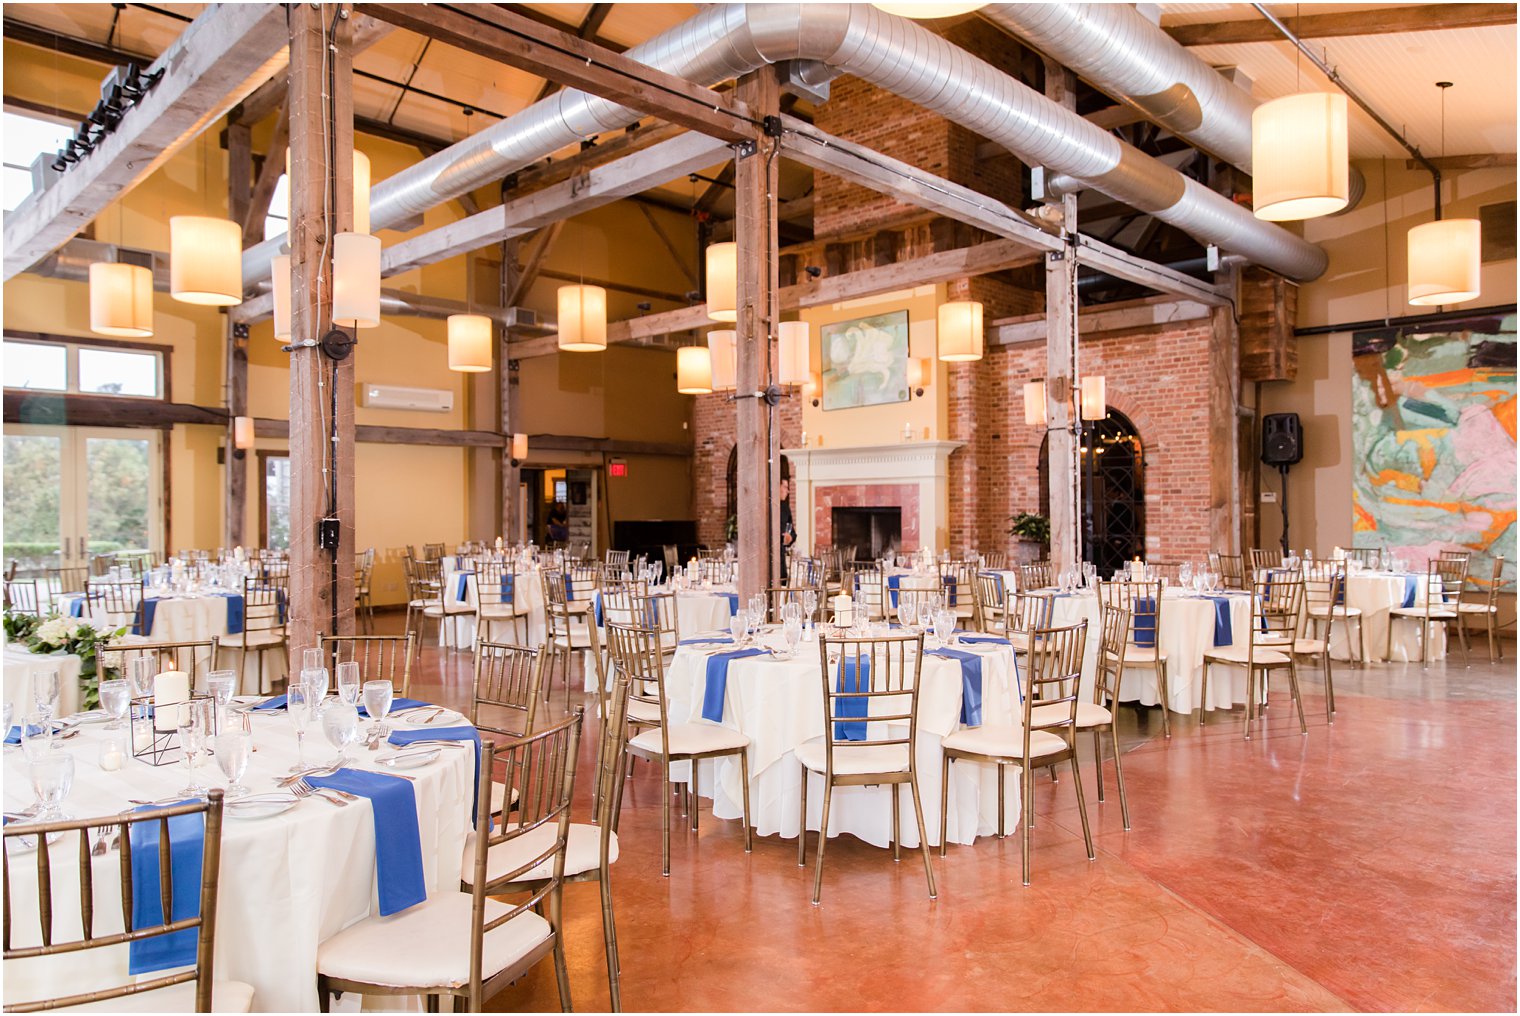 Laurita Winery reception room in New Egypt NJ | NJ vineyard wedding venue